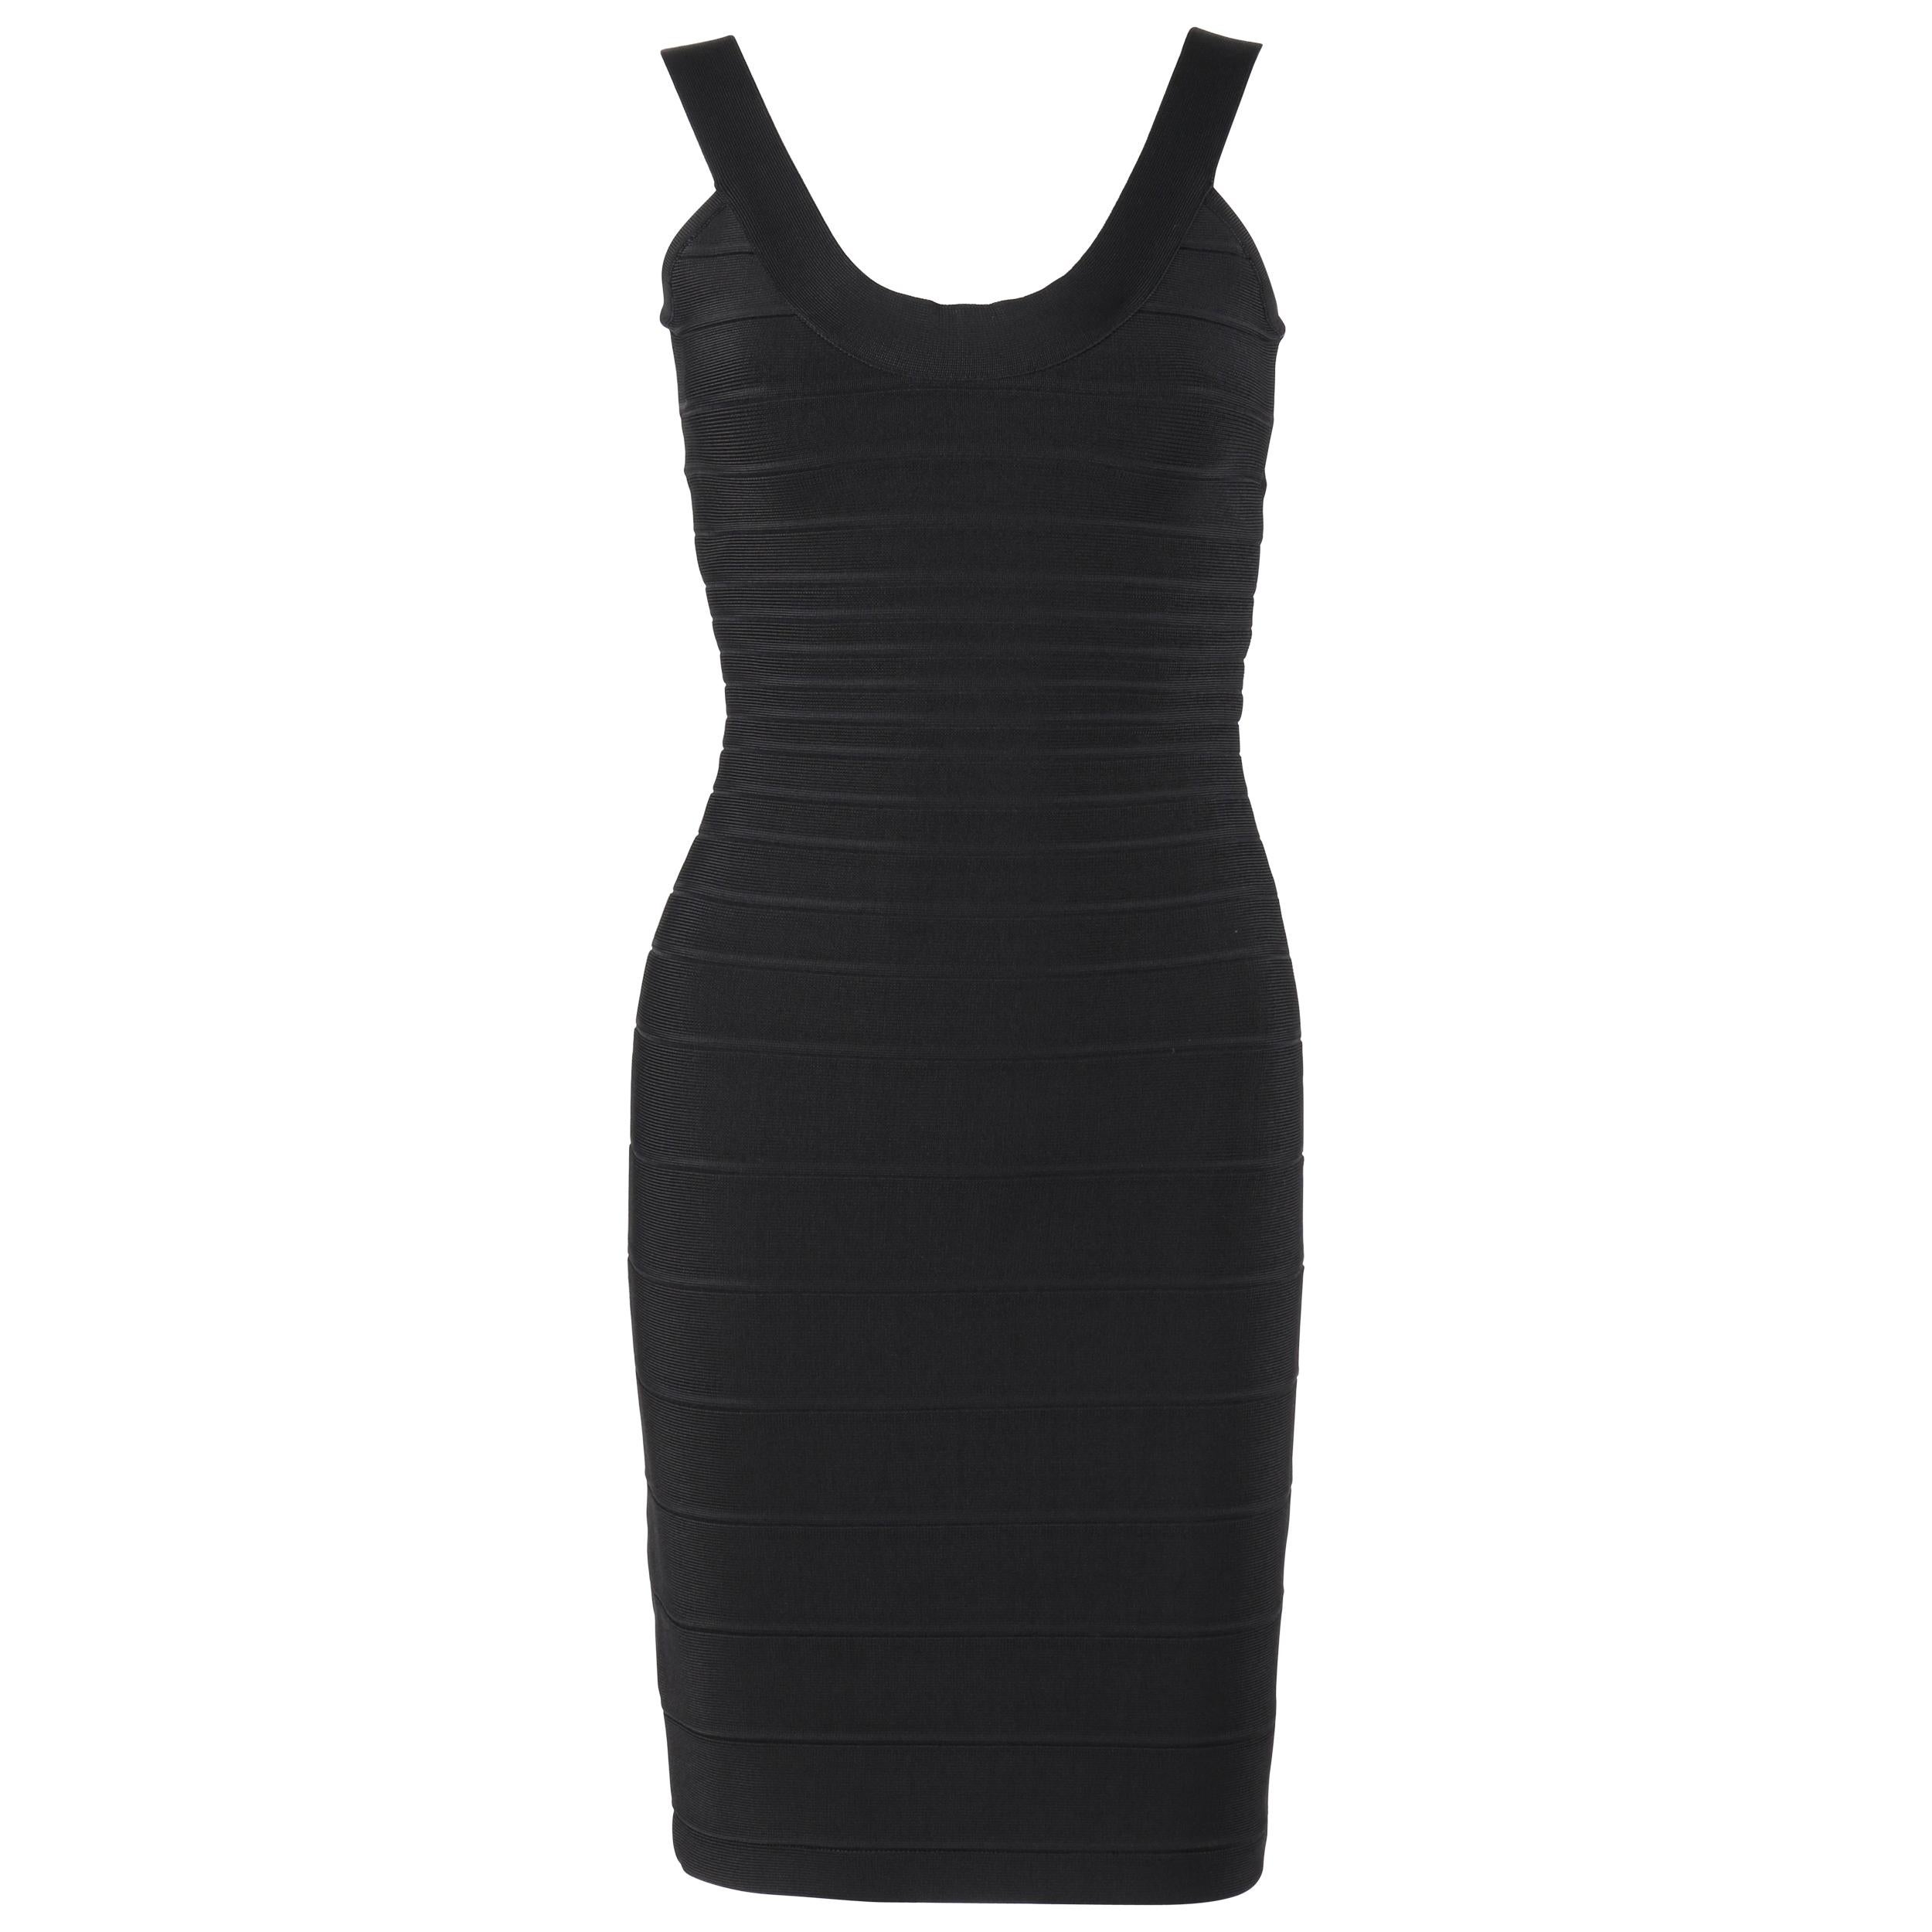 HERVE LEGER "Sydney" Black Bandage Knit Bodycon Cocktail Dress Size XS NWT